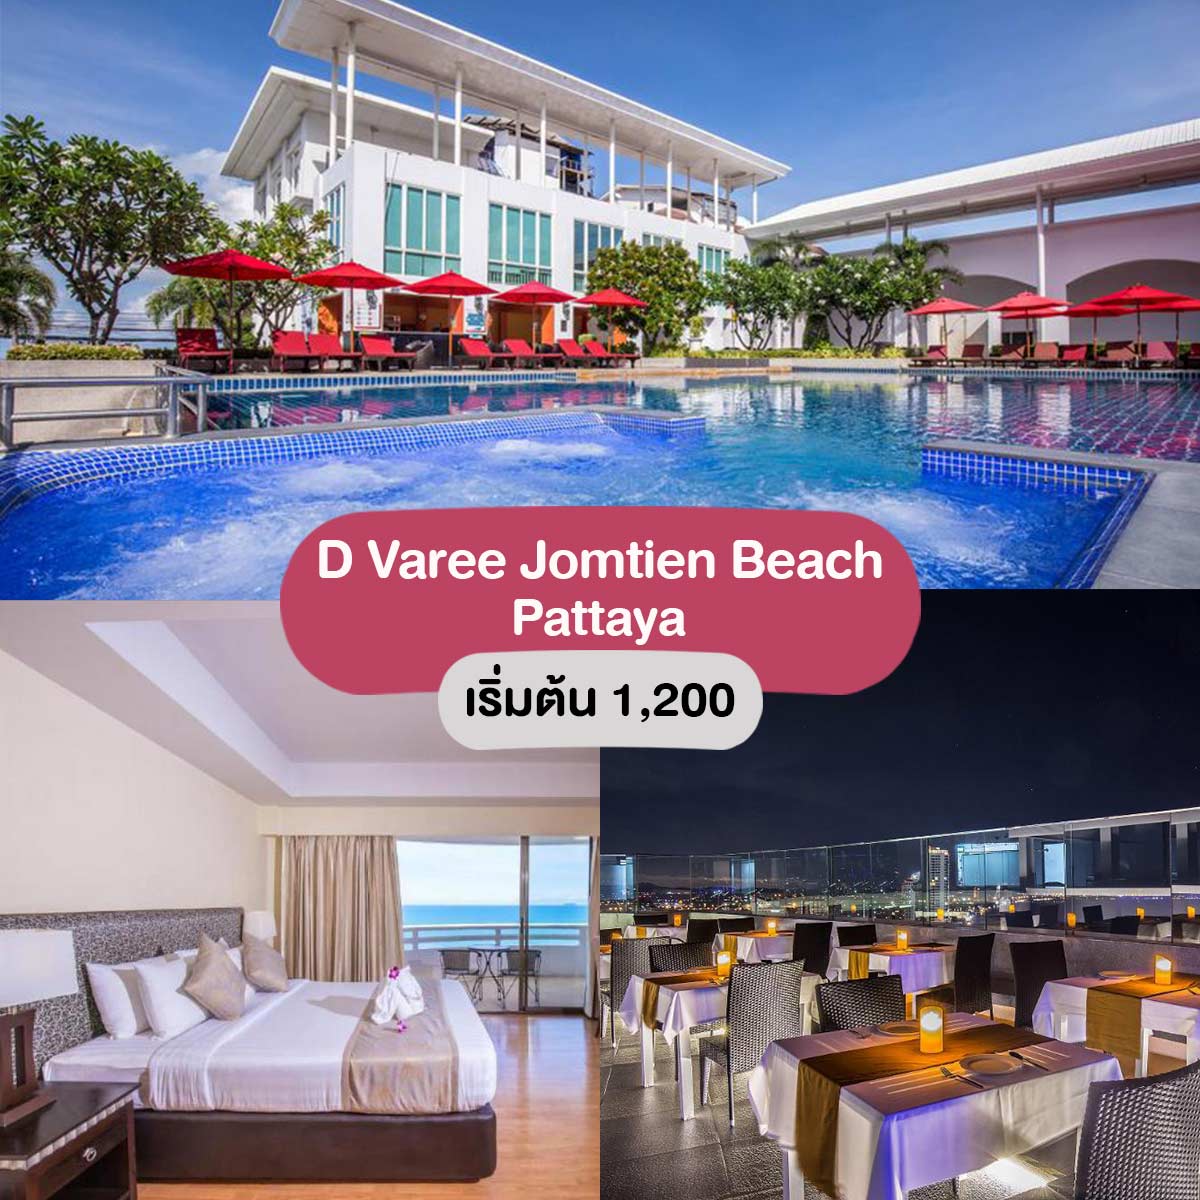 D Varee Jomtien Beach, Pattaya 